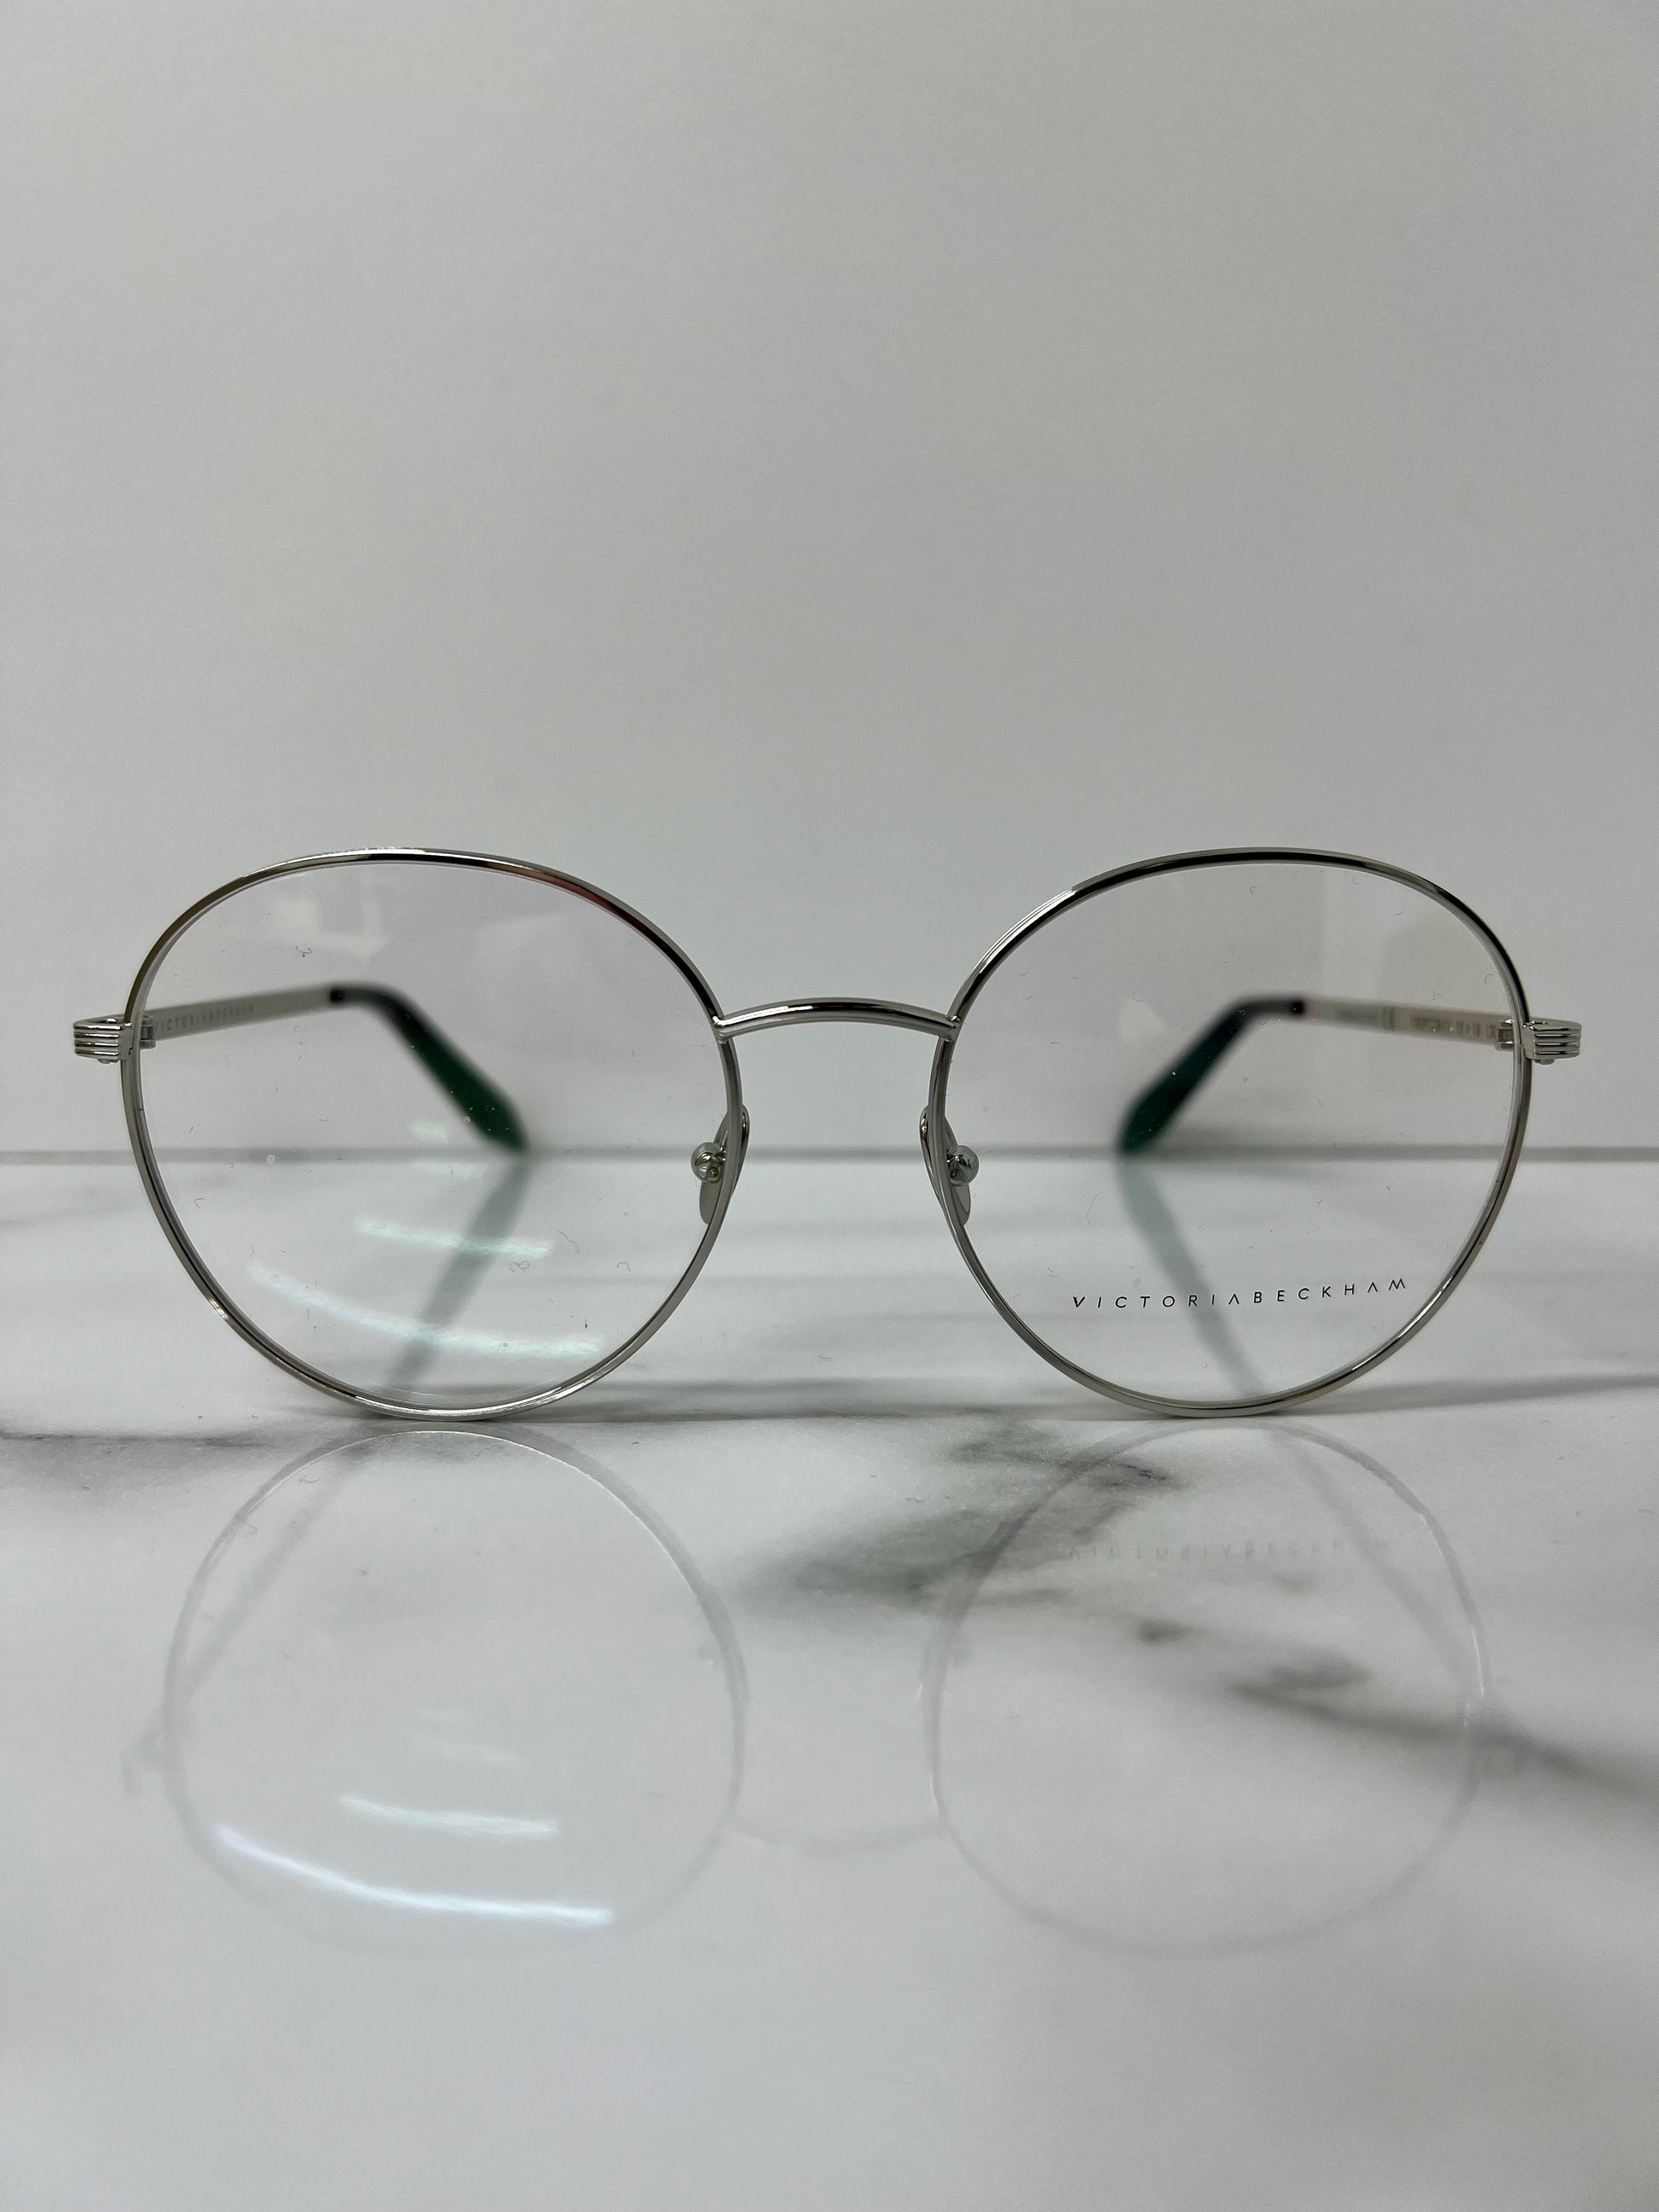 Victoria Beckham Glasses Frames Optical Women Silver Black Eyeglasses VBOPT228